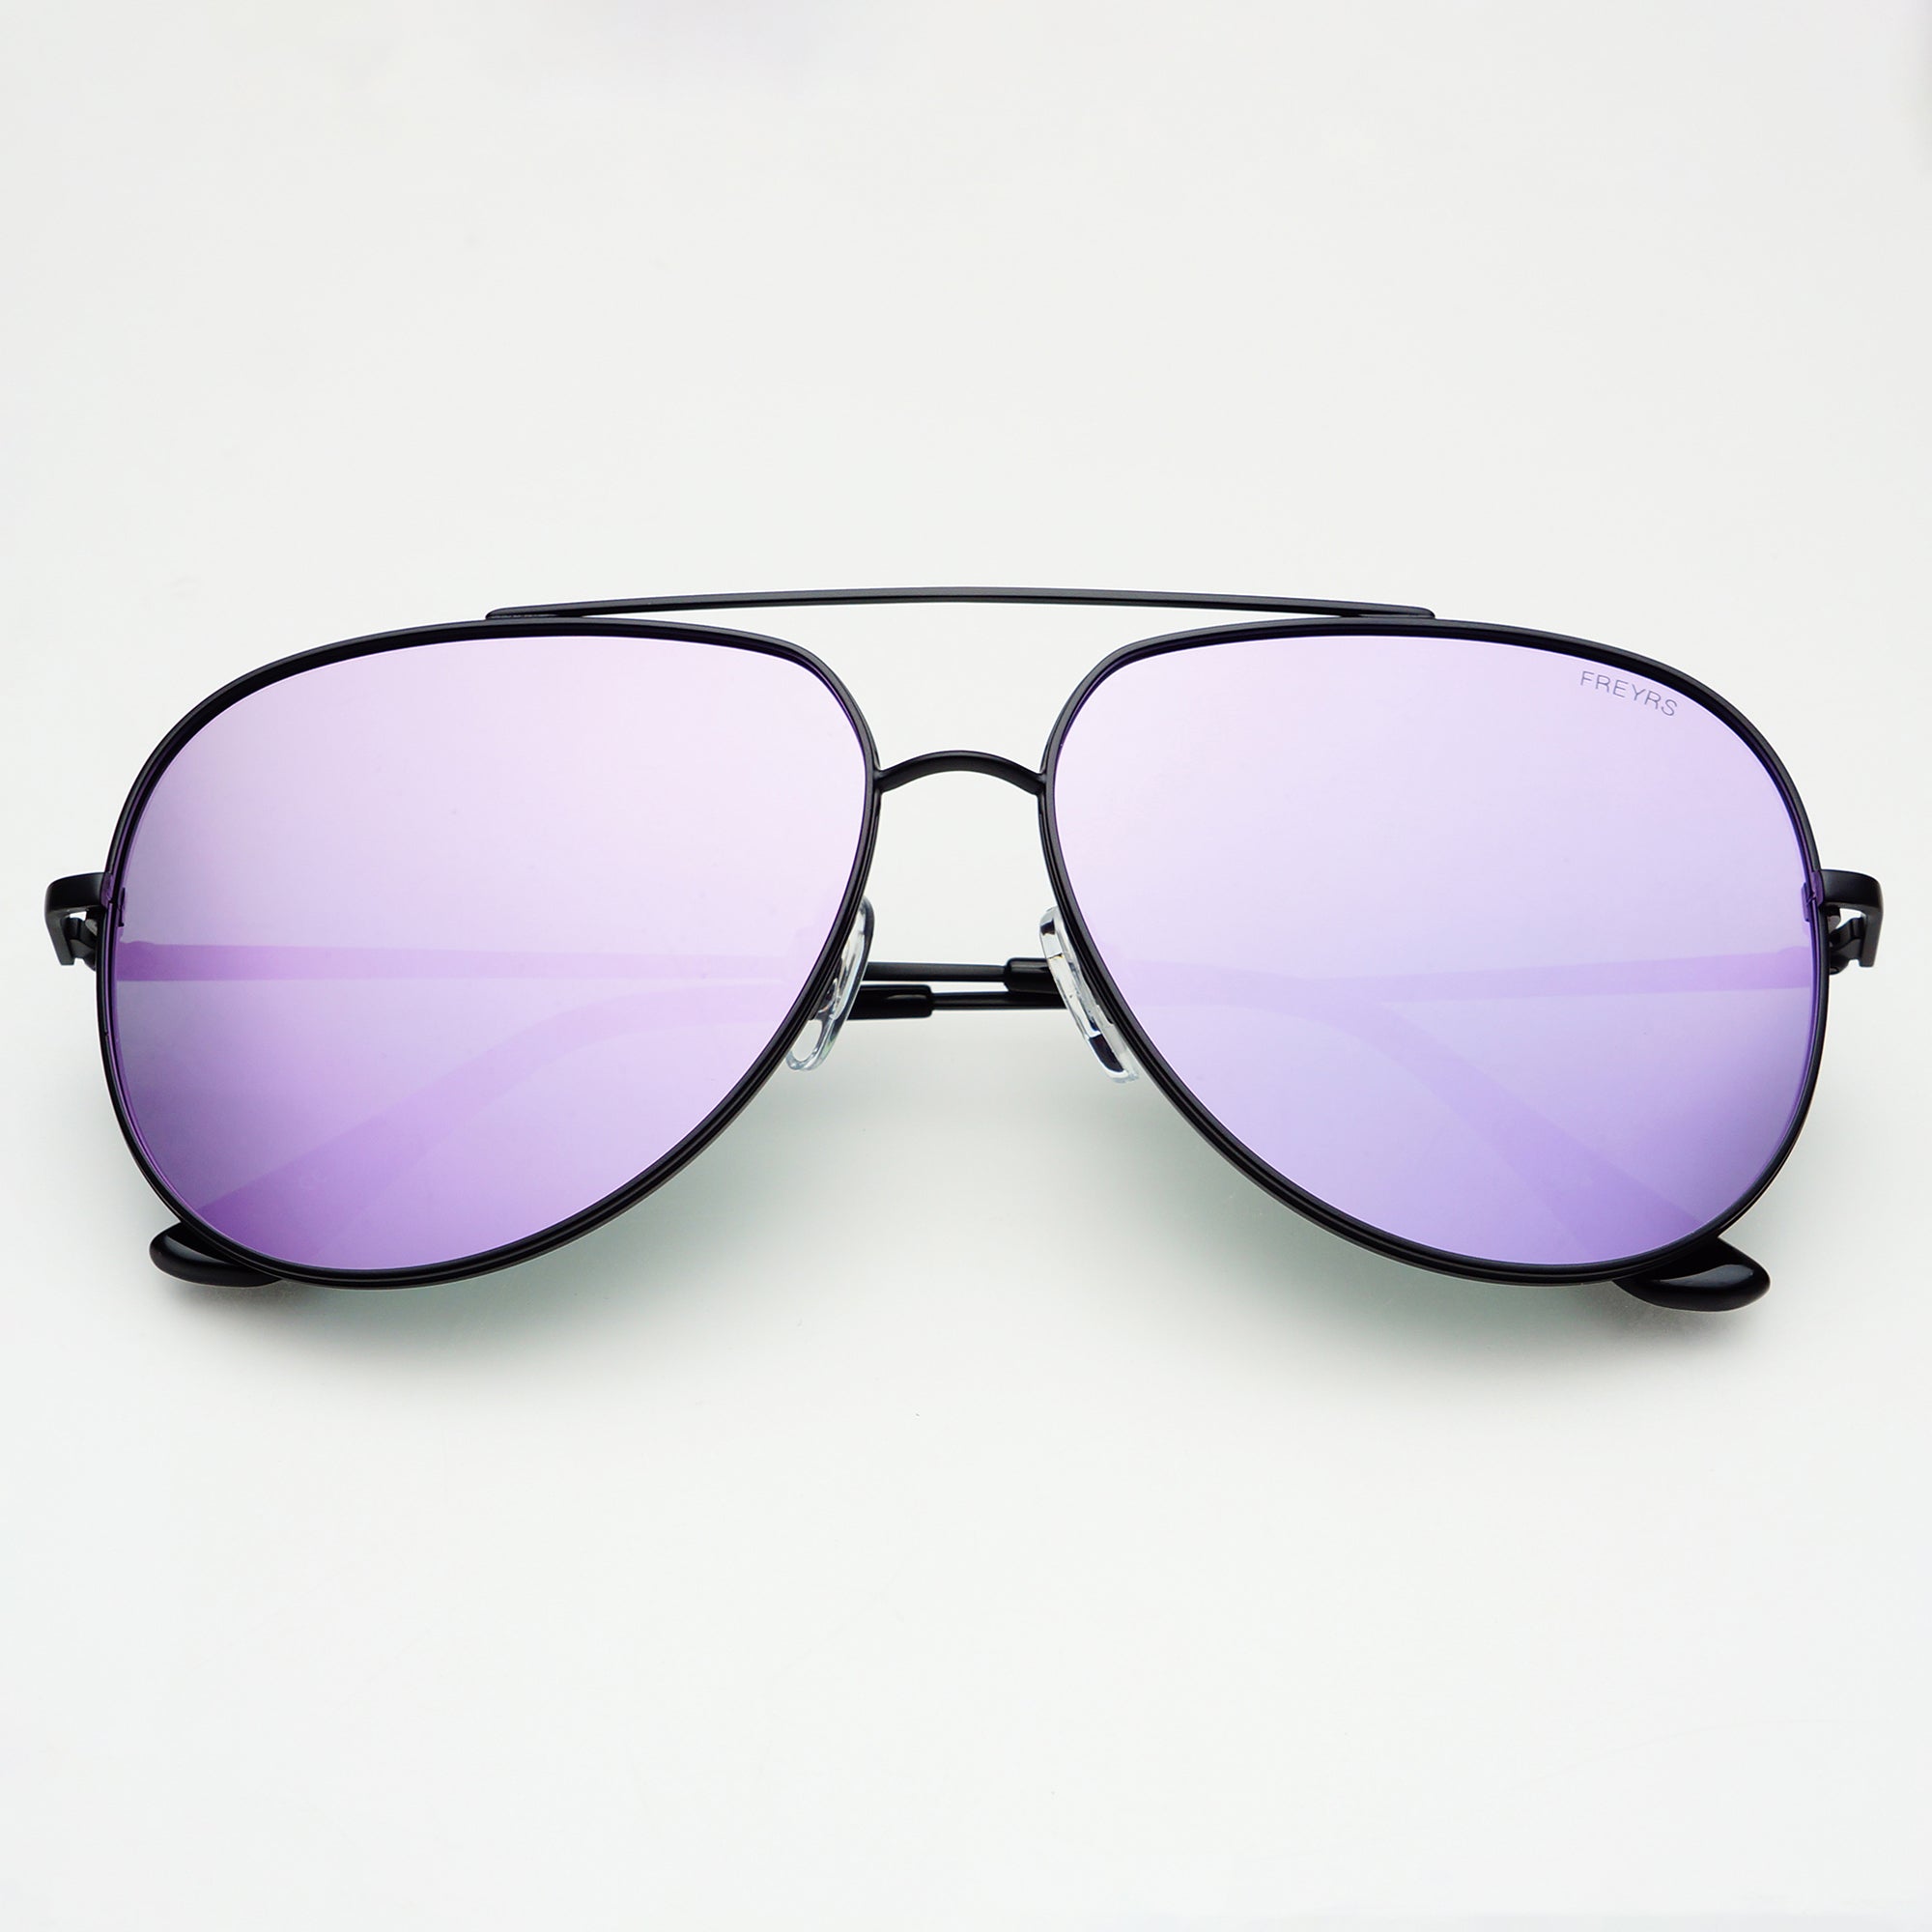 Freyrs Premium Max Black / Lavender Mirror Sunglasses - Black / Lavender Mirror